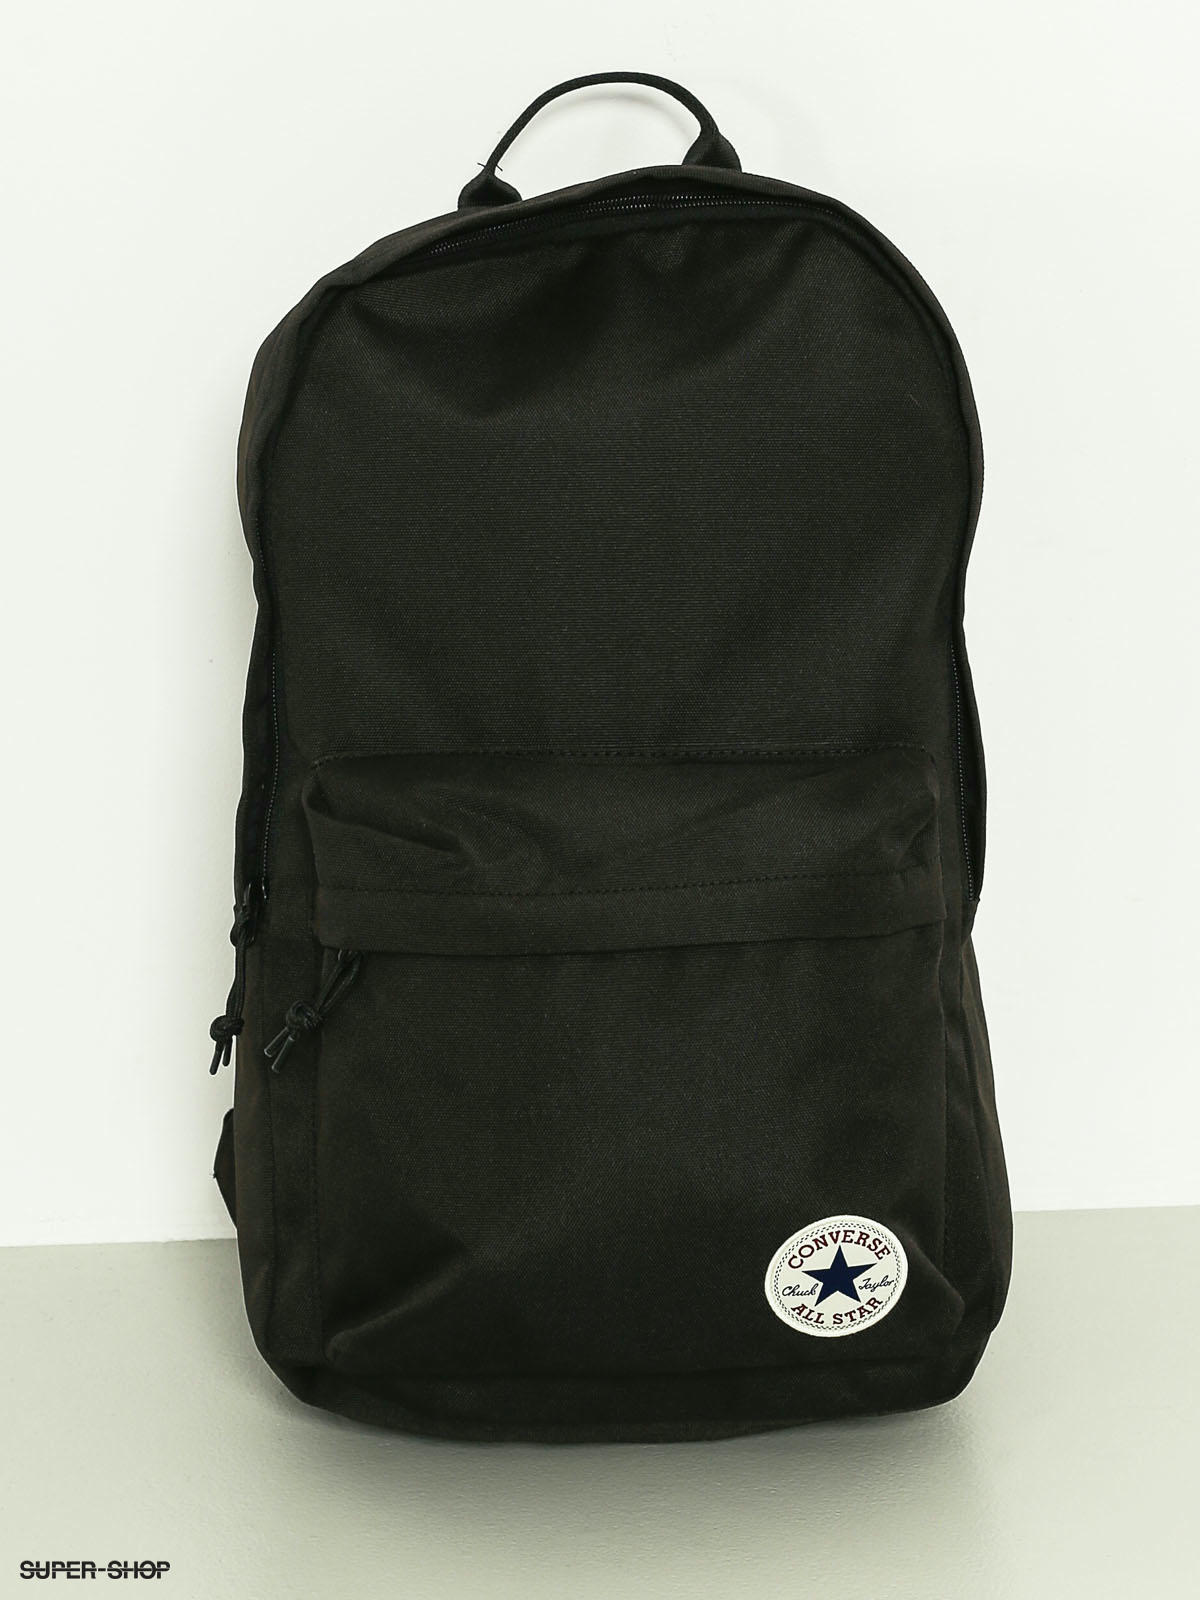 converse edc backpack